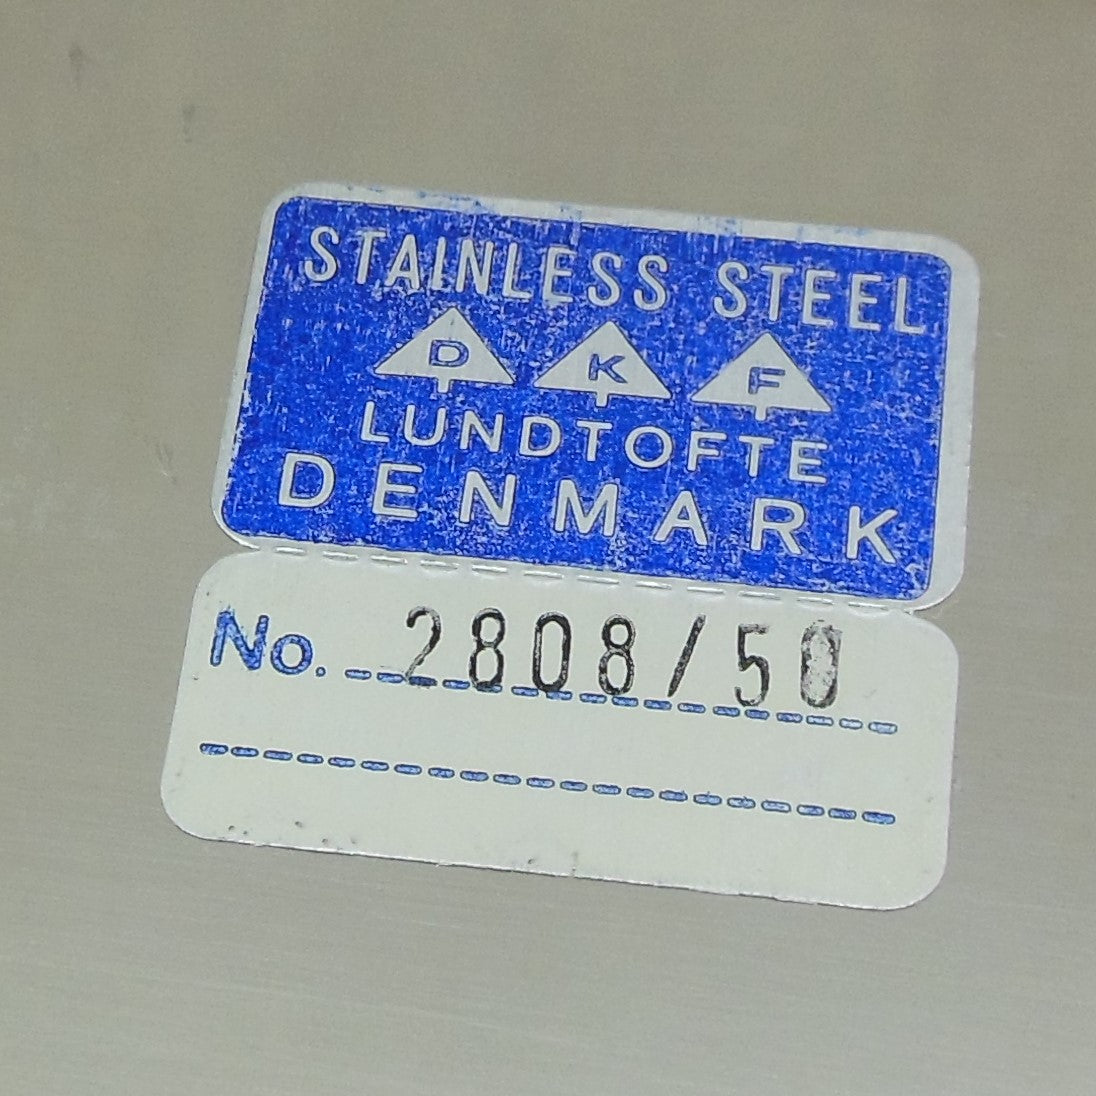 DKF Lundtofte Denmark Stainless Pair Long Serving Bowls NOS 2808/50 1808/38